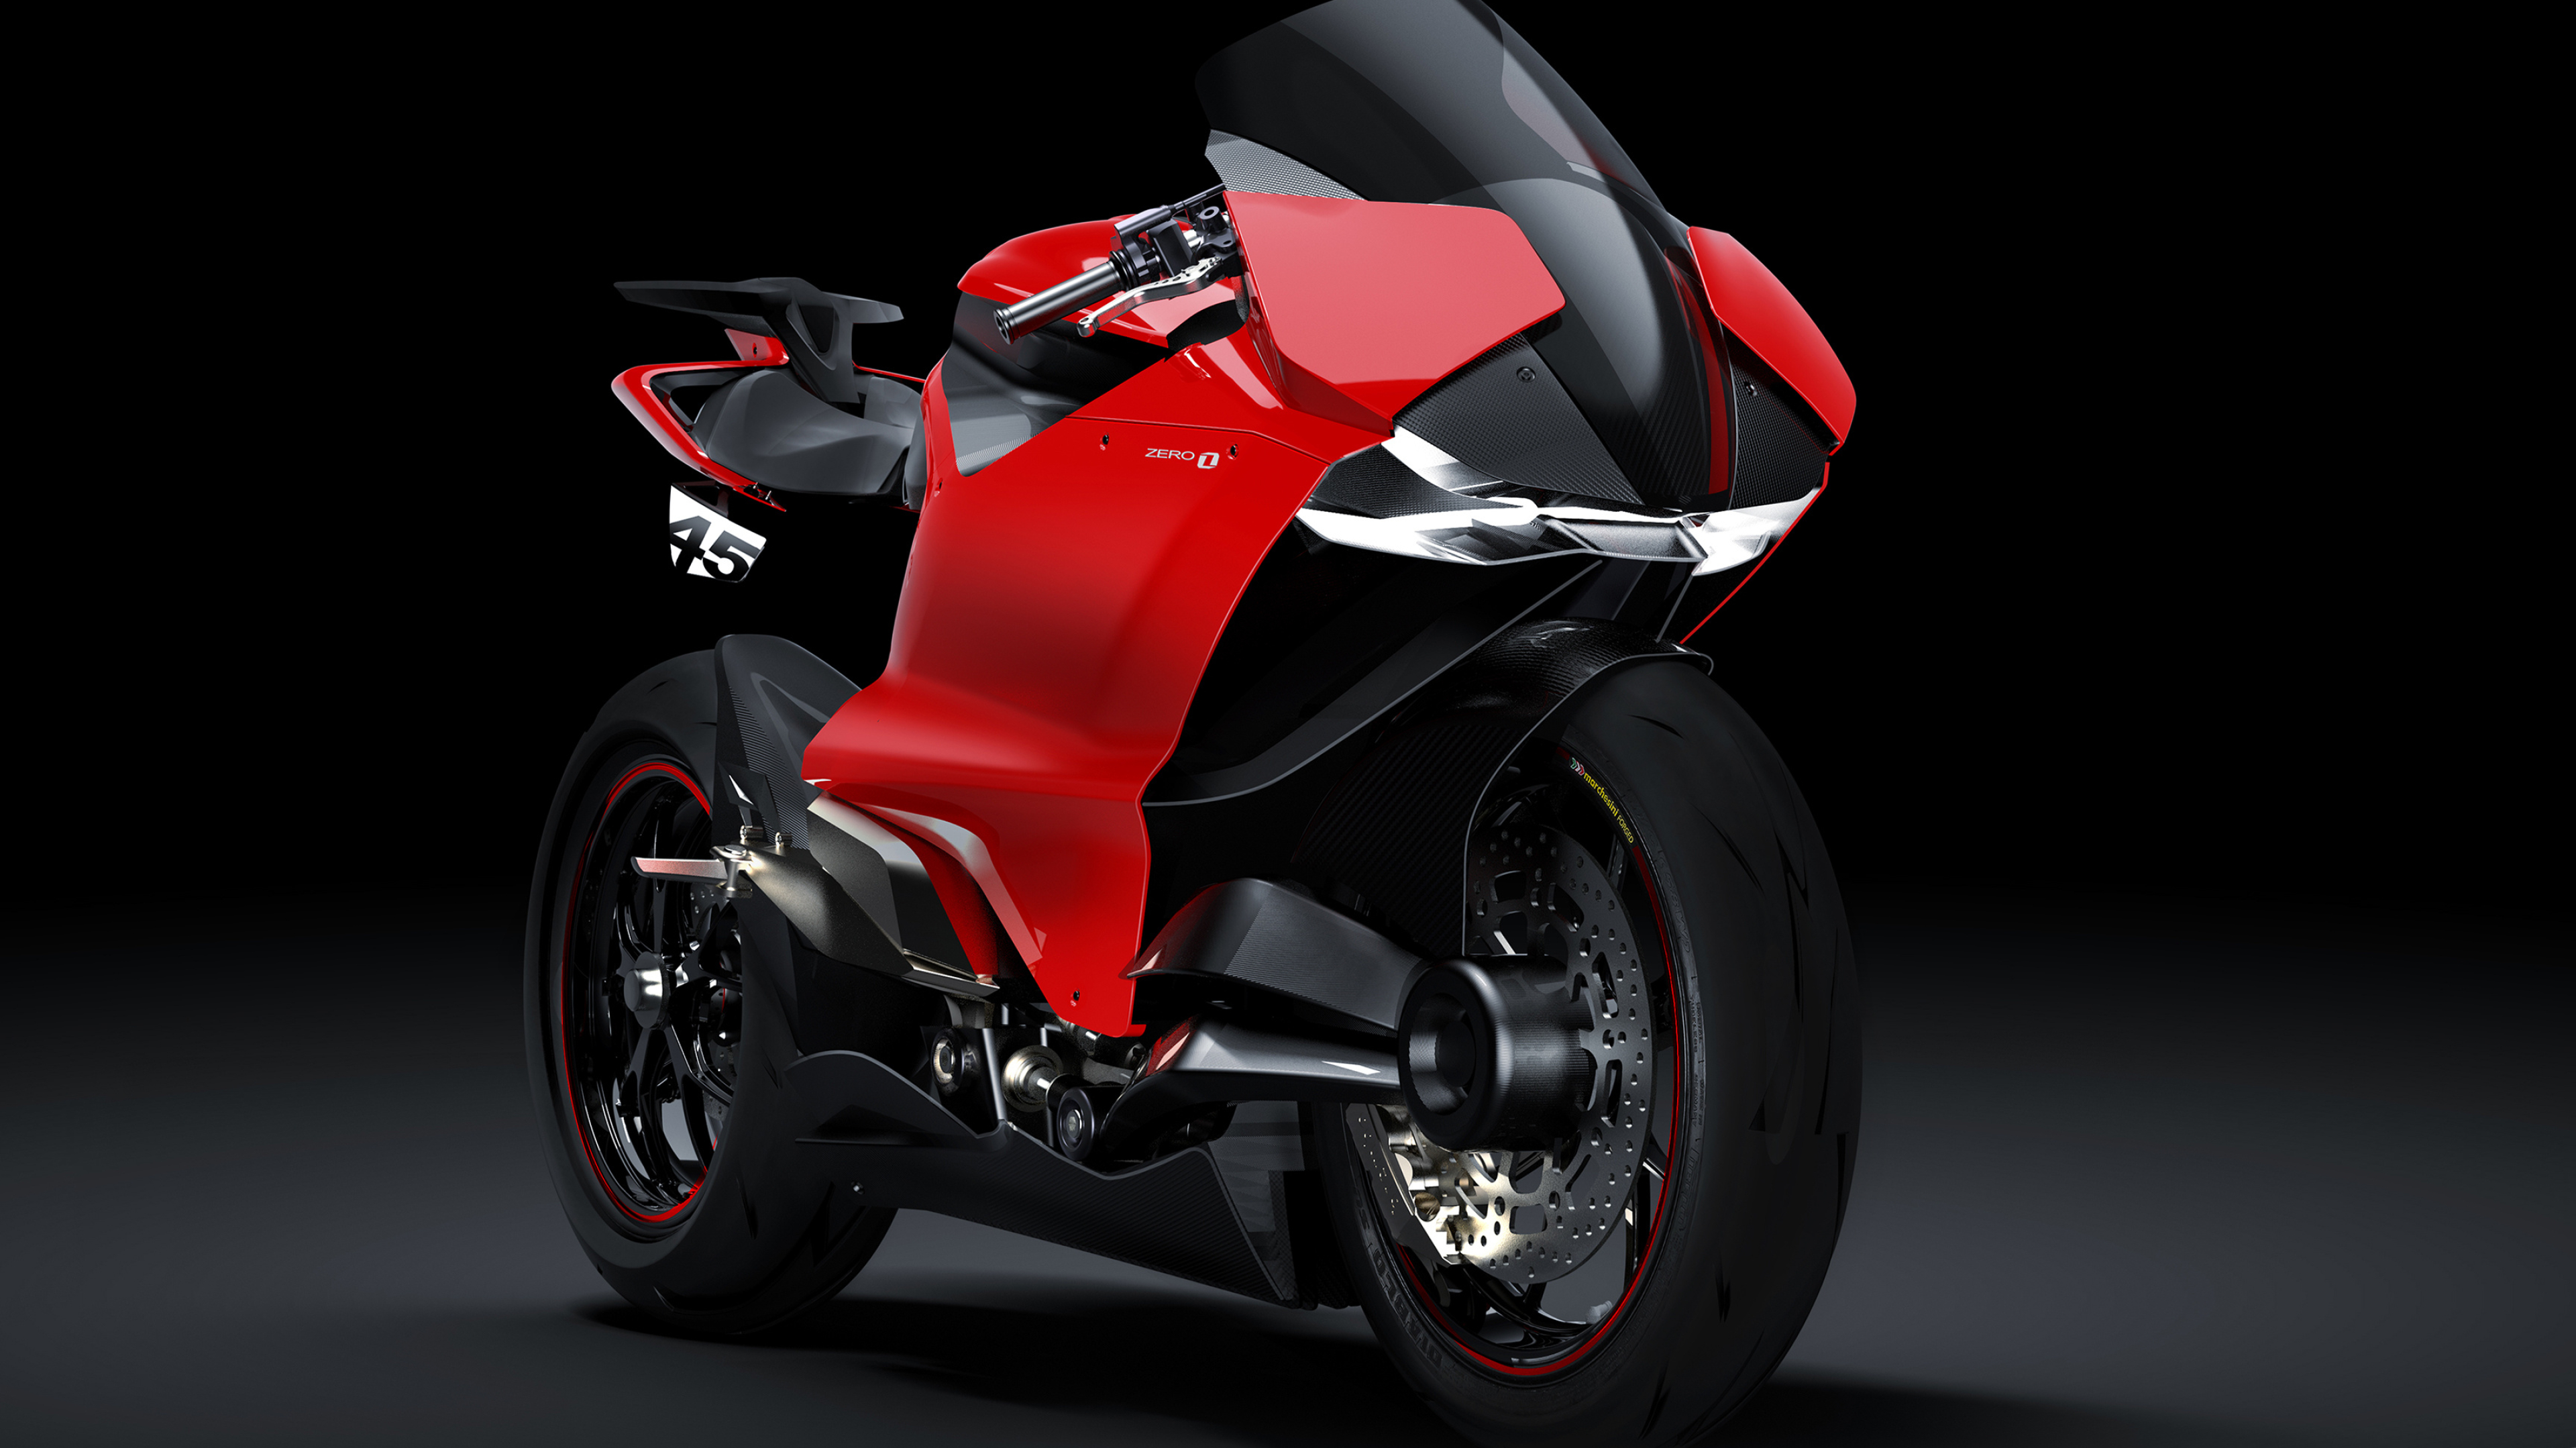 Superbike: Concept art of Ducati Zero Electric motorcycle, Racing bike, World Superbike and MotoGP. 3840x2160 HD Wallpaper.